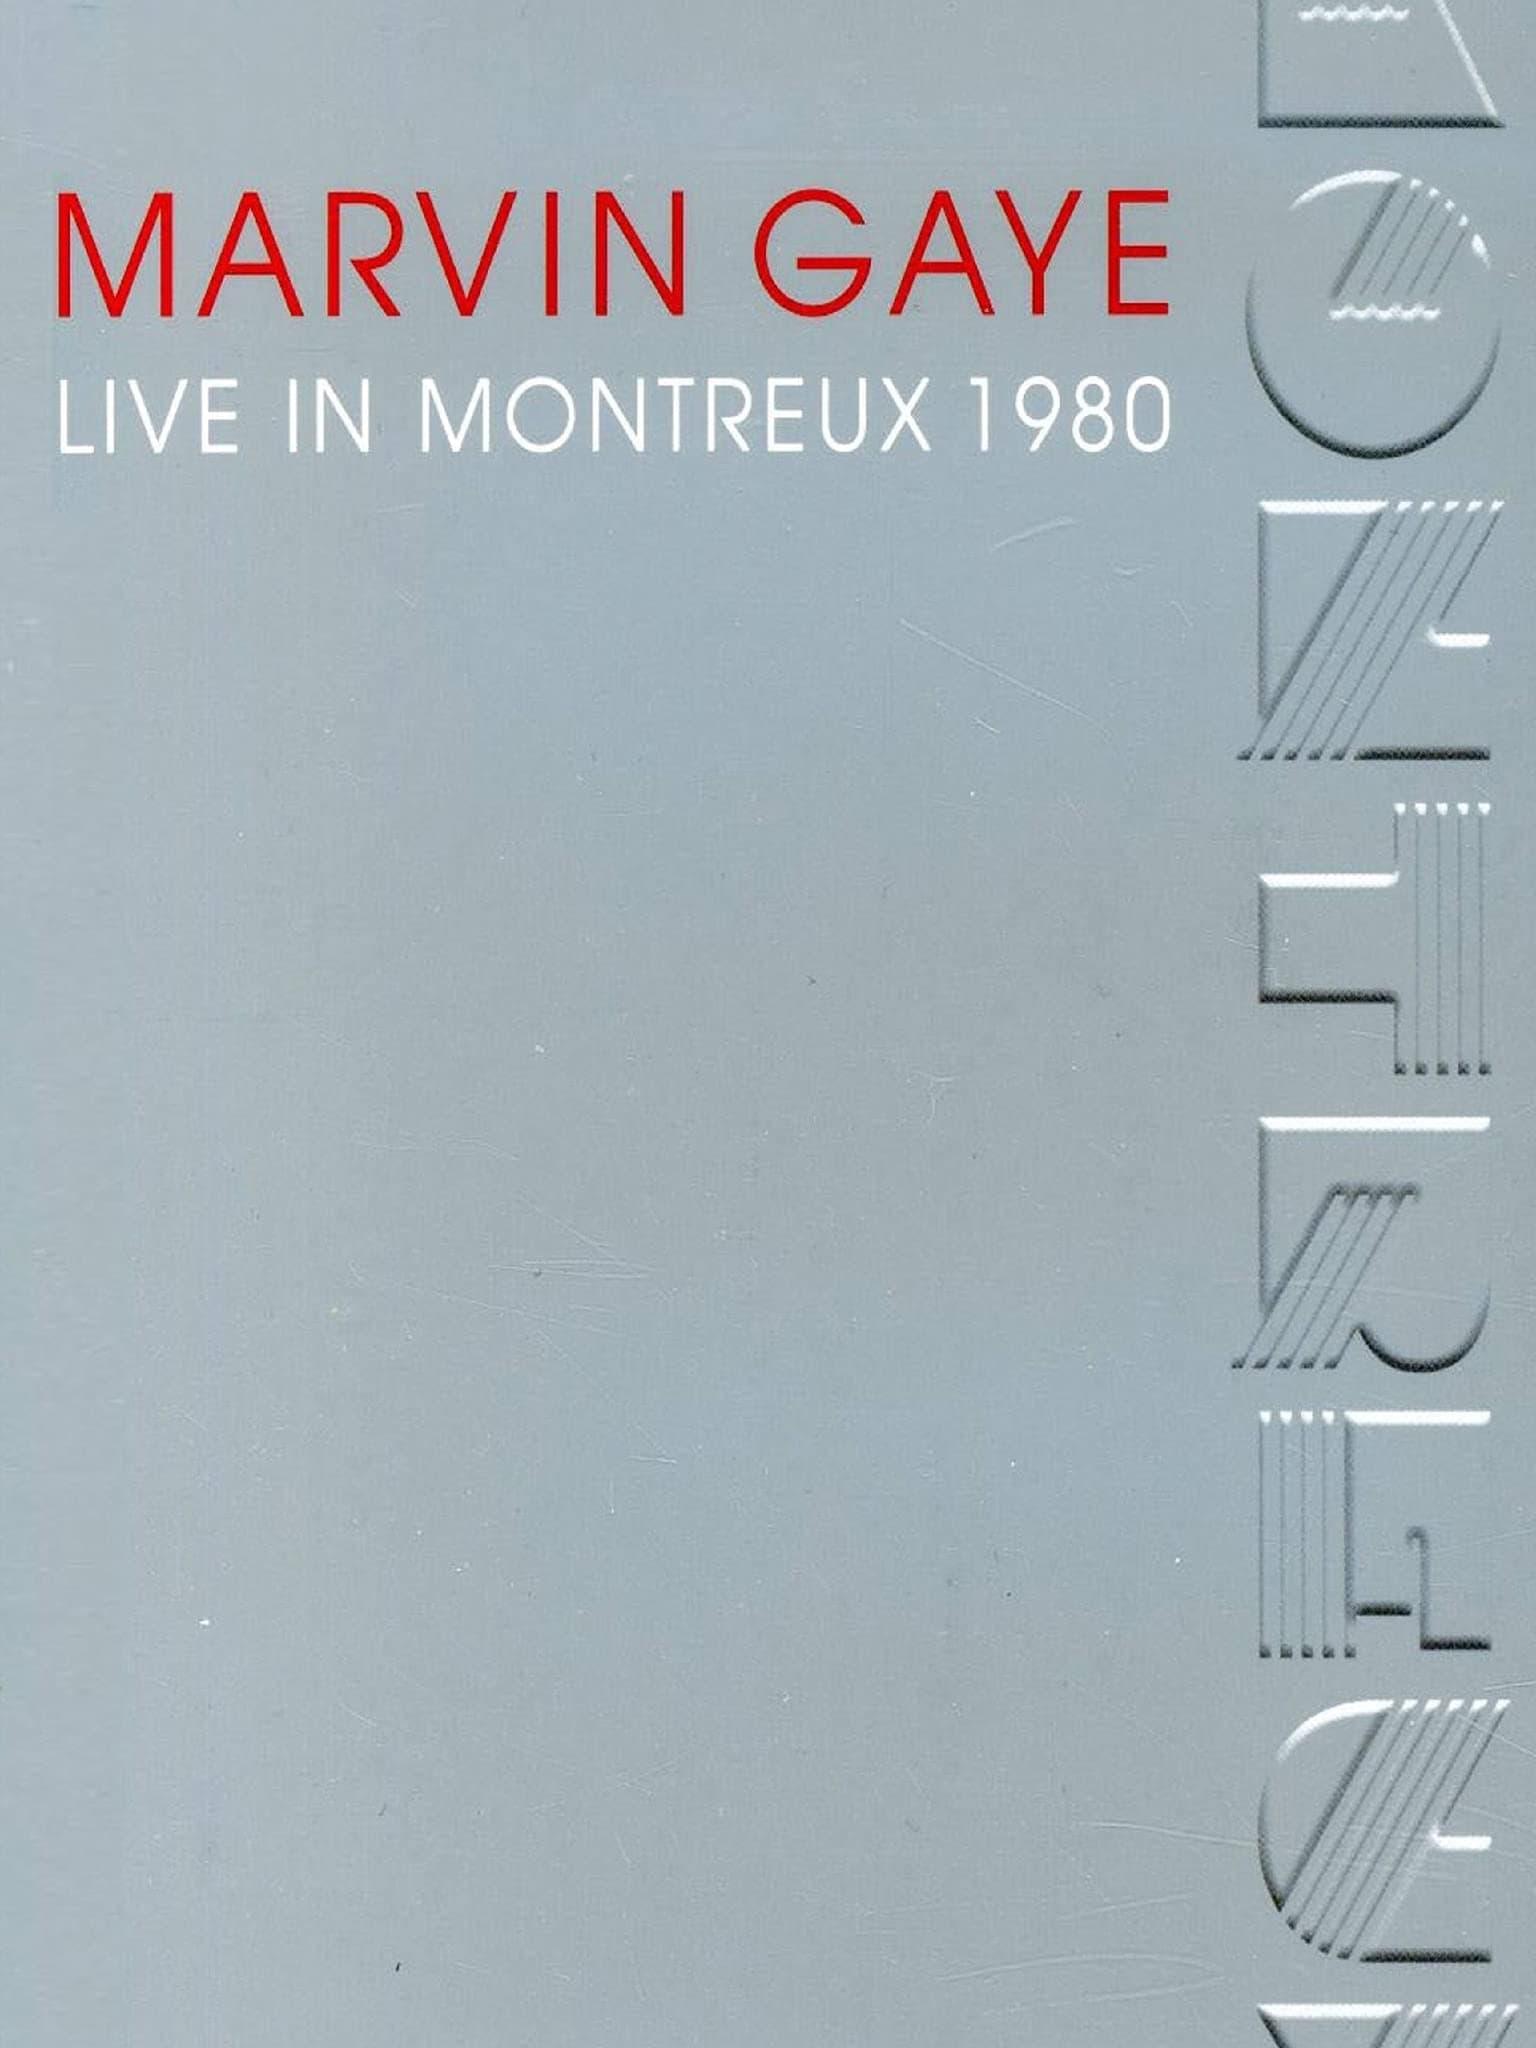 Marvin Gaye: Live at Montreux poster